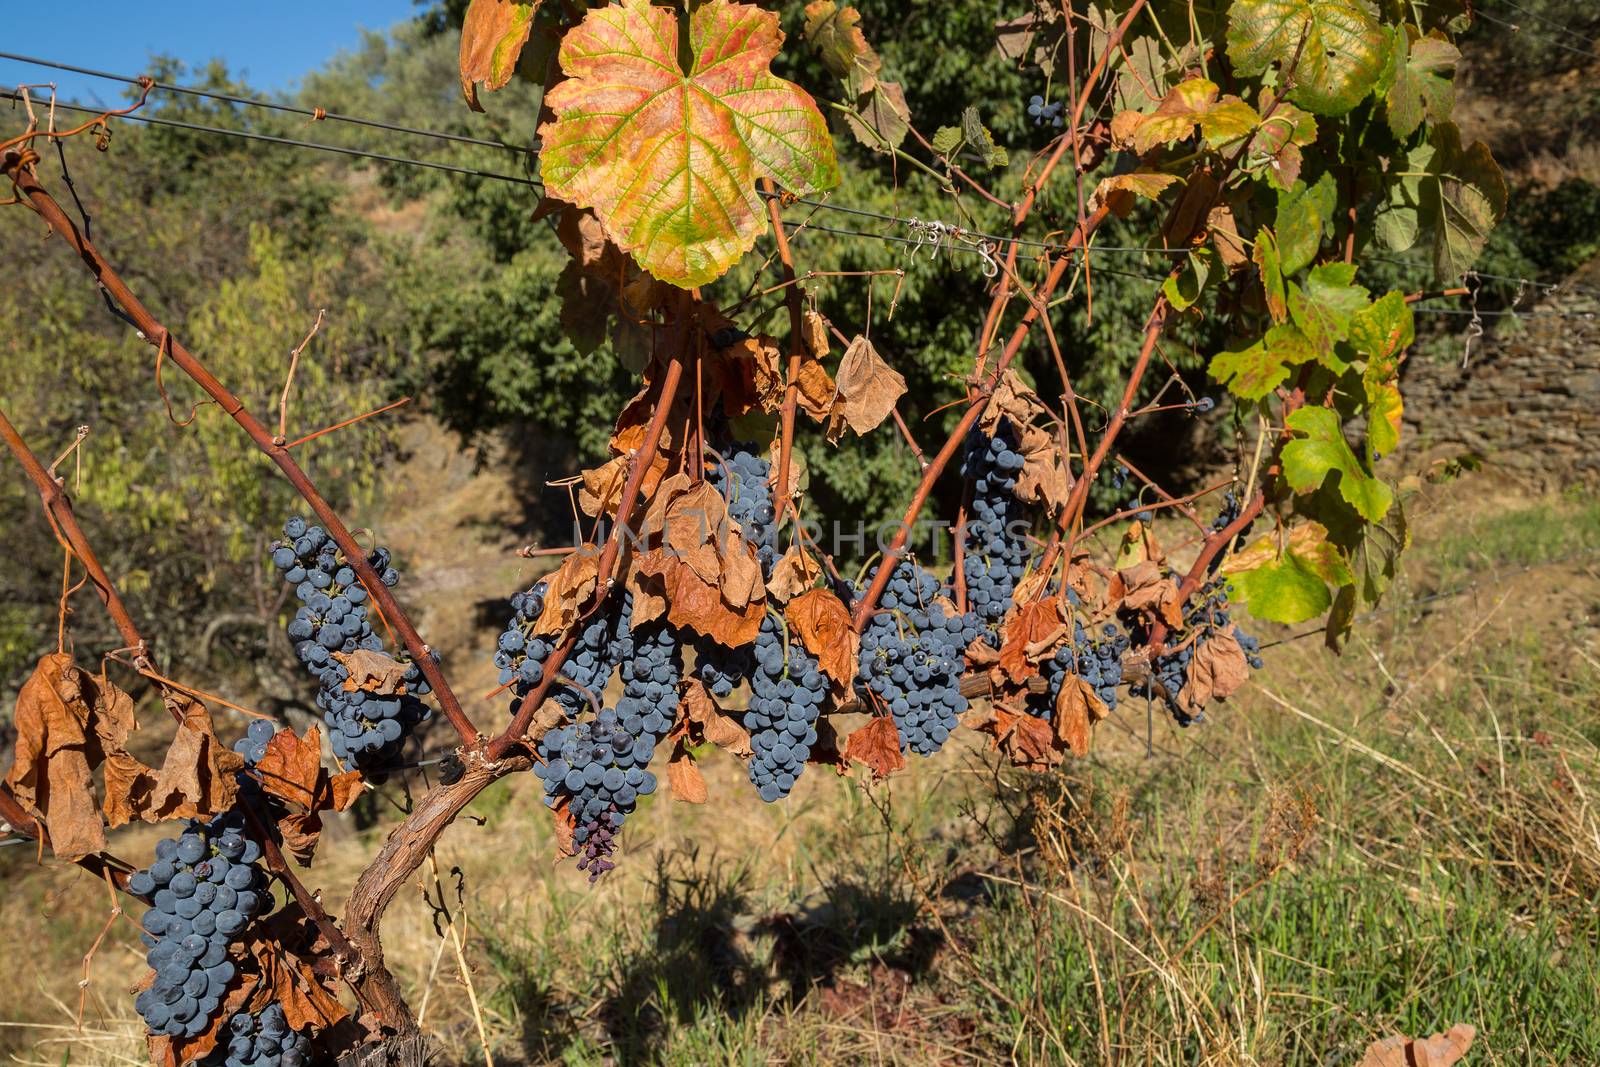 Grapes from Douro valley, near Foz Coa, Portugal